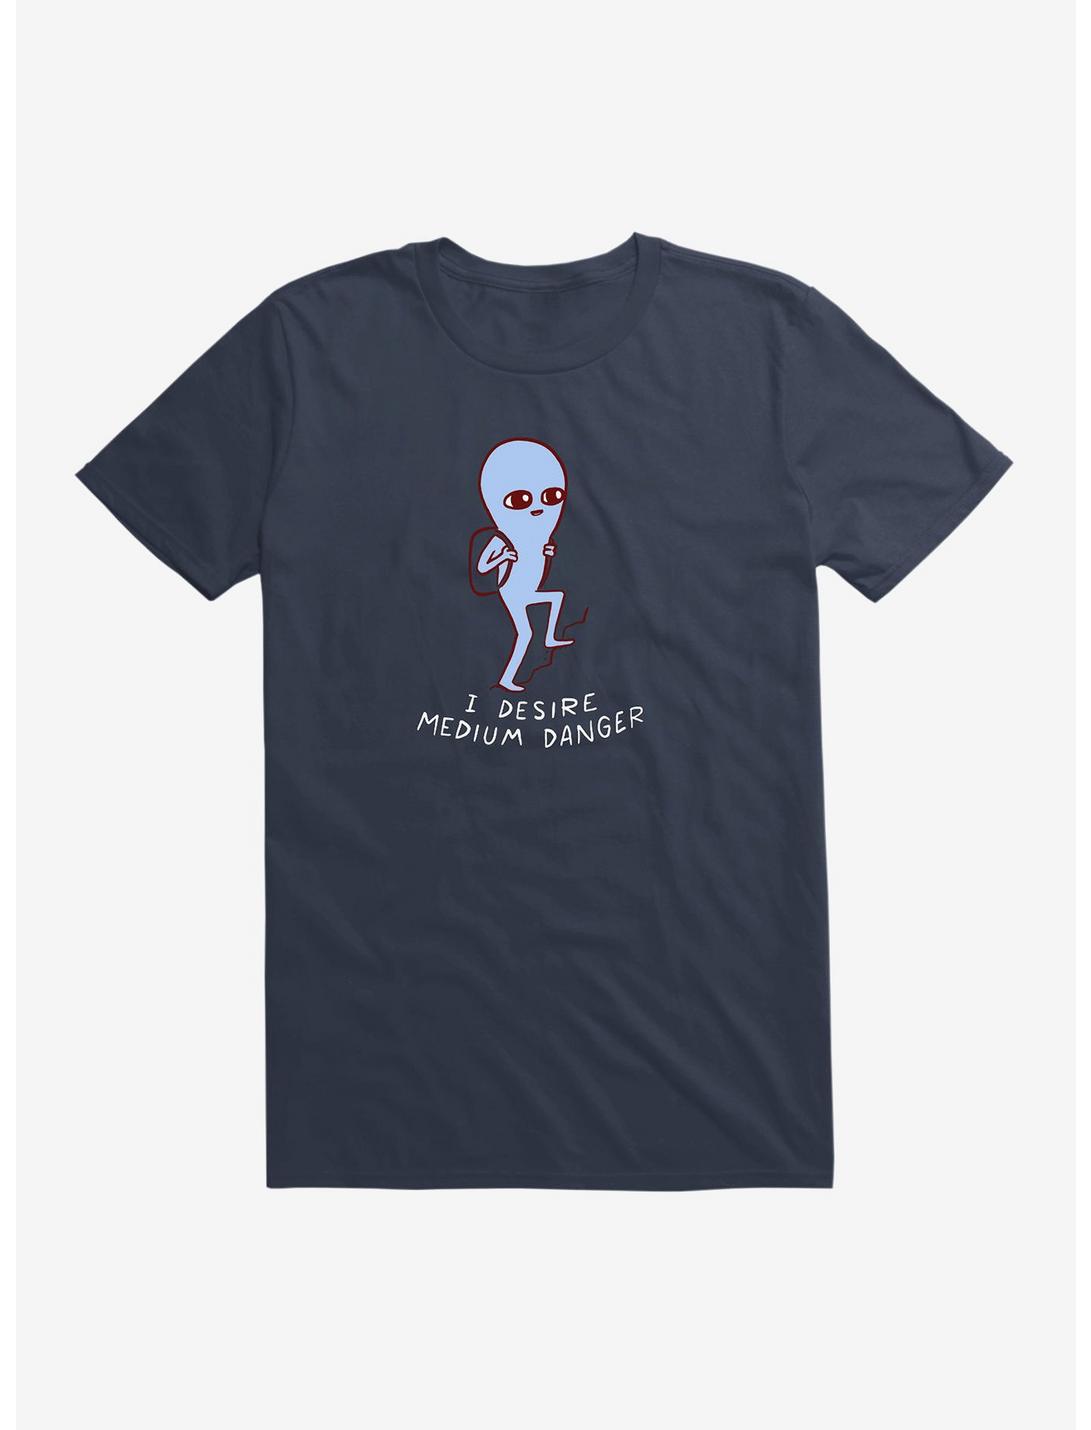 Strange Planet Medium Danger T-Shirt, NAVY, hi-res